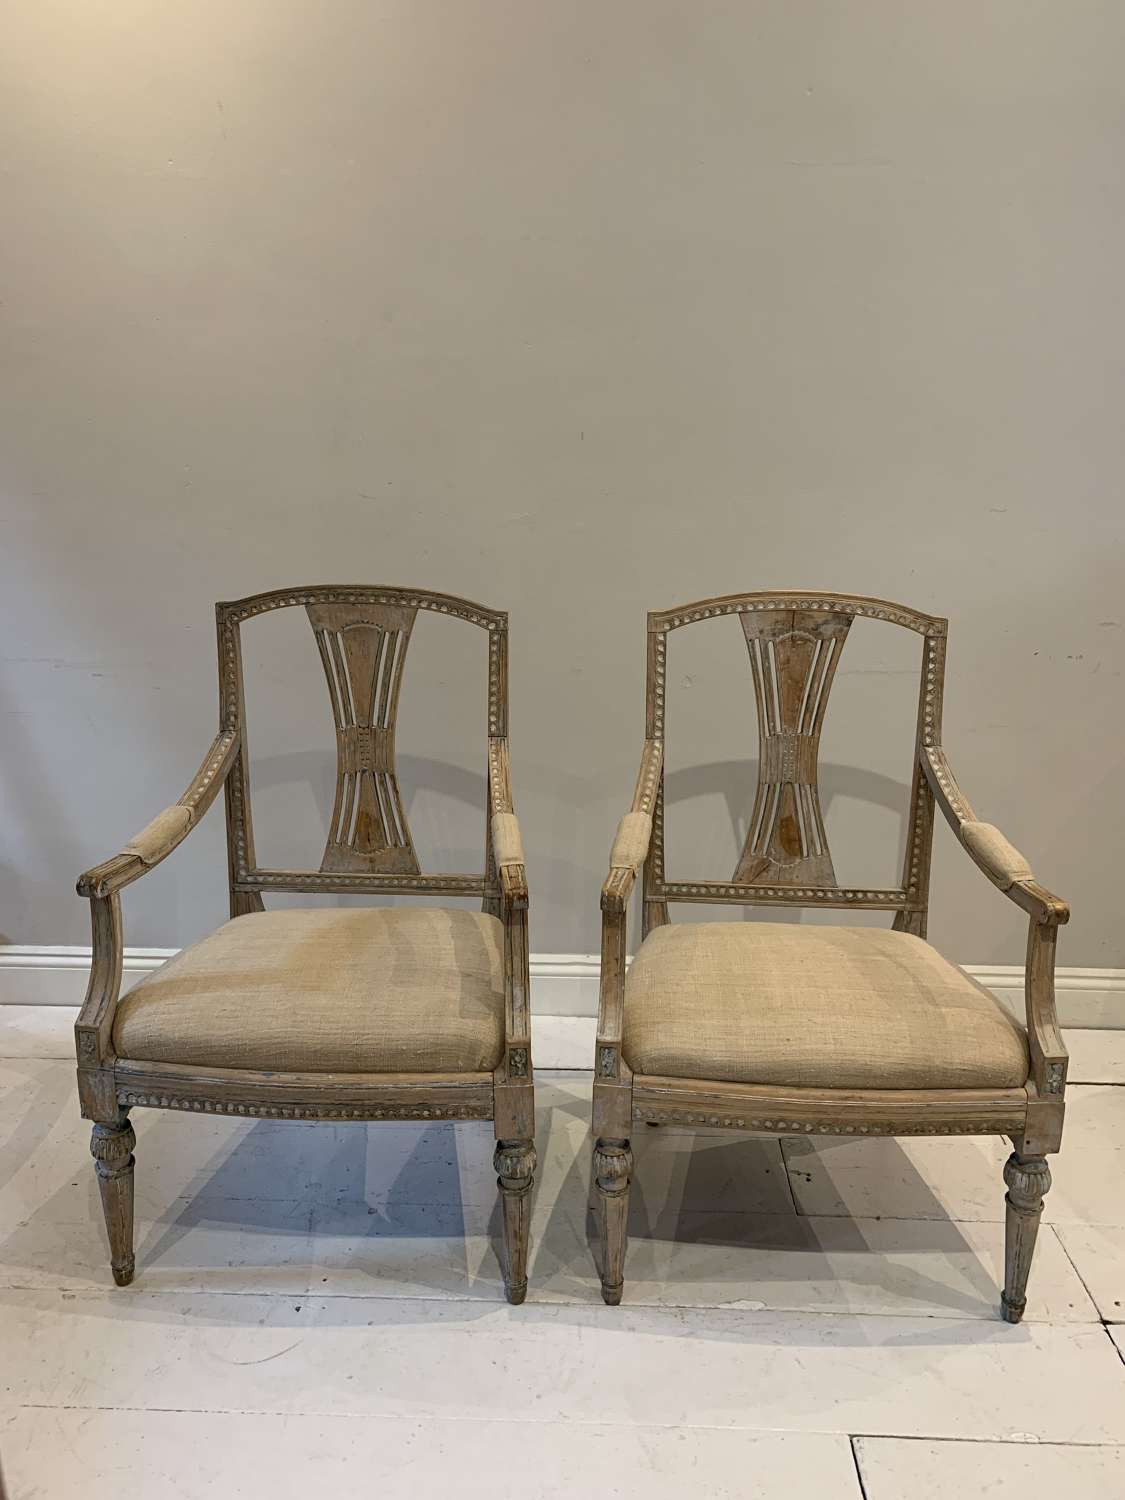 1920’s pair of Swedish chairs scraped to the original paint